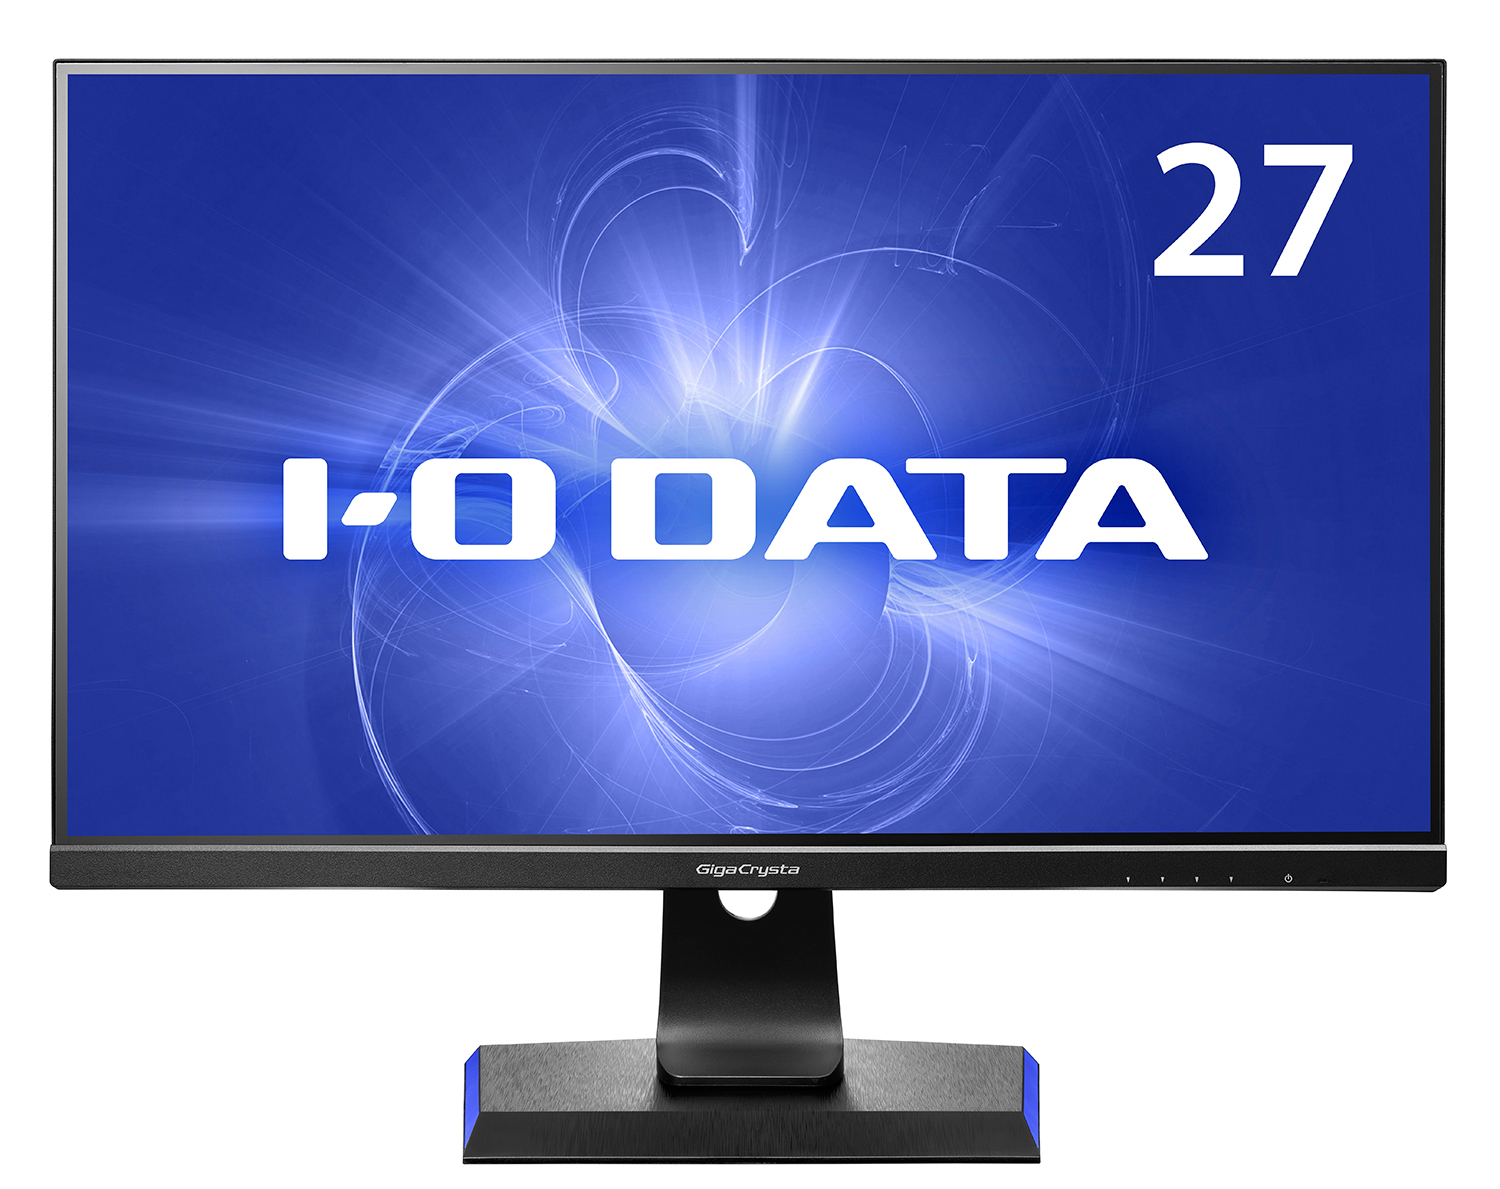 LCD-GC271HXB | ゲーミングモニター「GigaCrysta」 | IODATA 